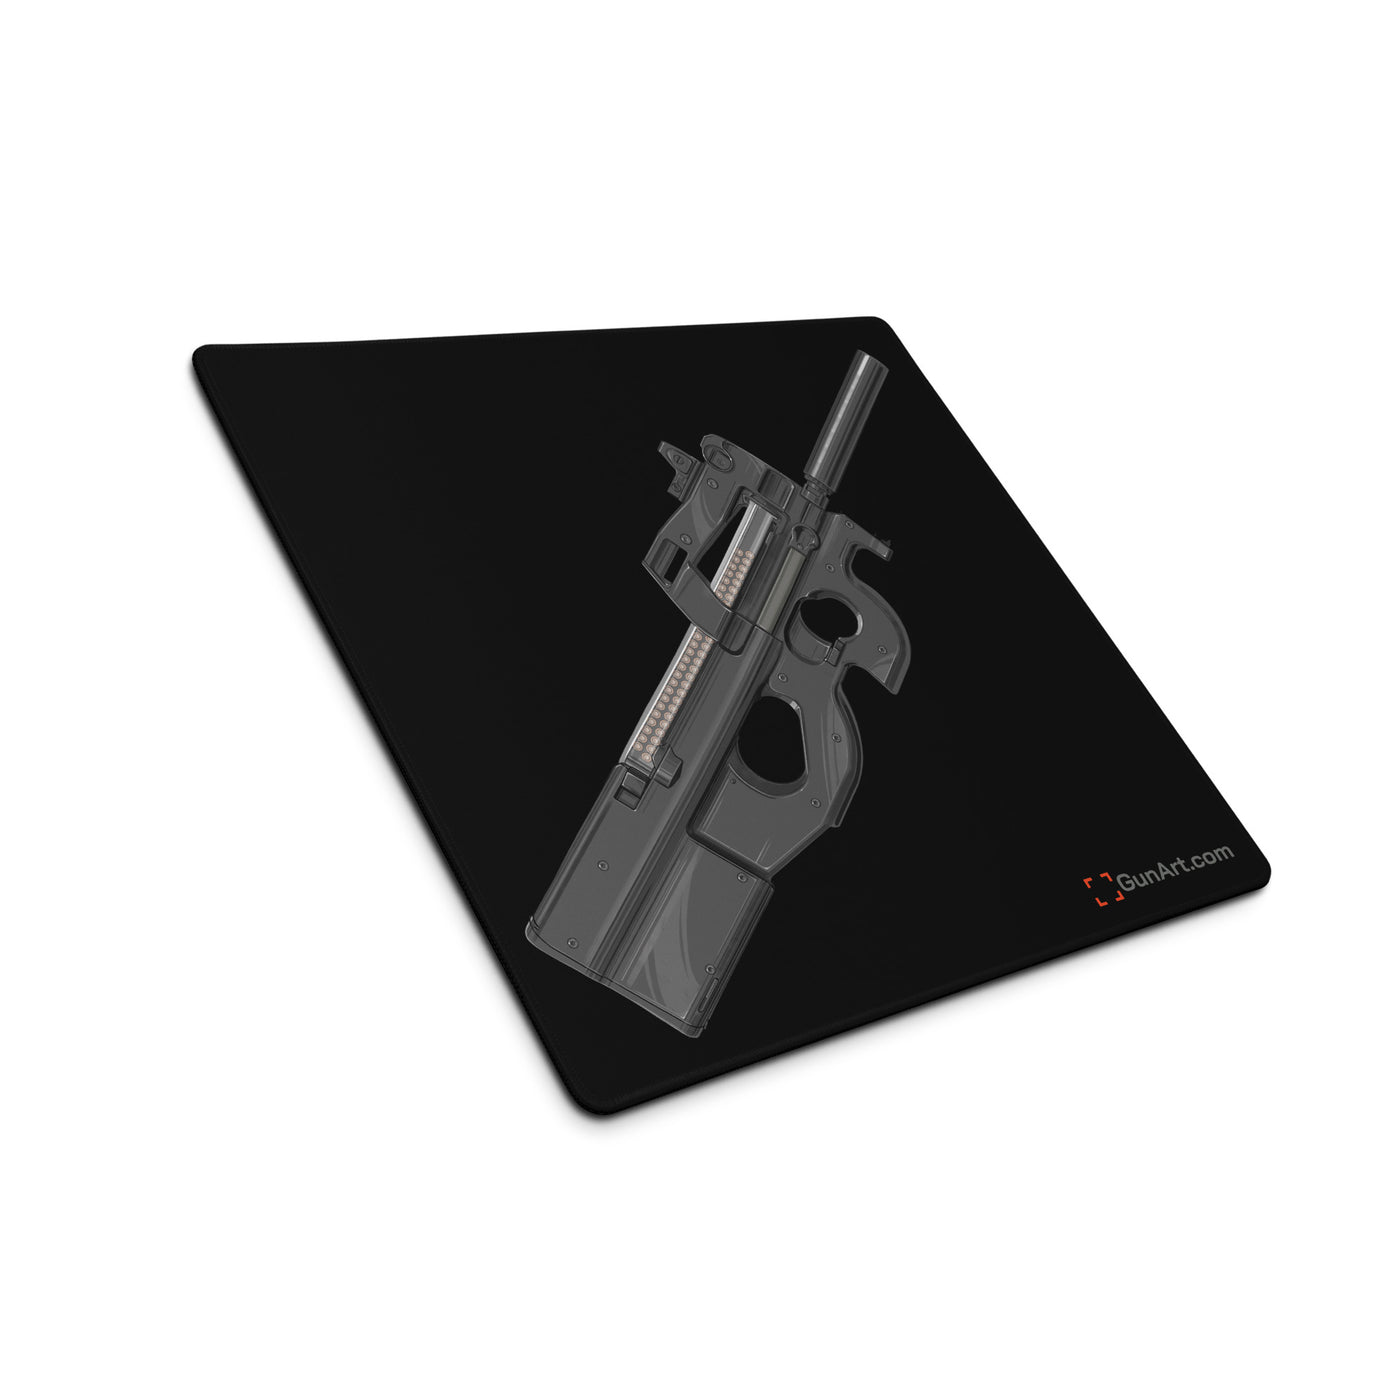 Secret Service Bullpup 5.7x28mm Subgun Gaming Mouse Pad - Just The Piece - Black Background